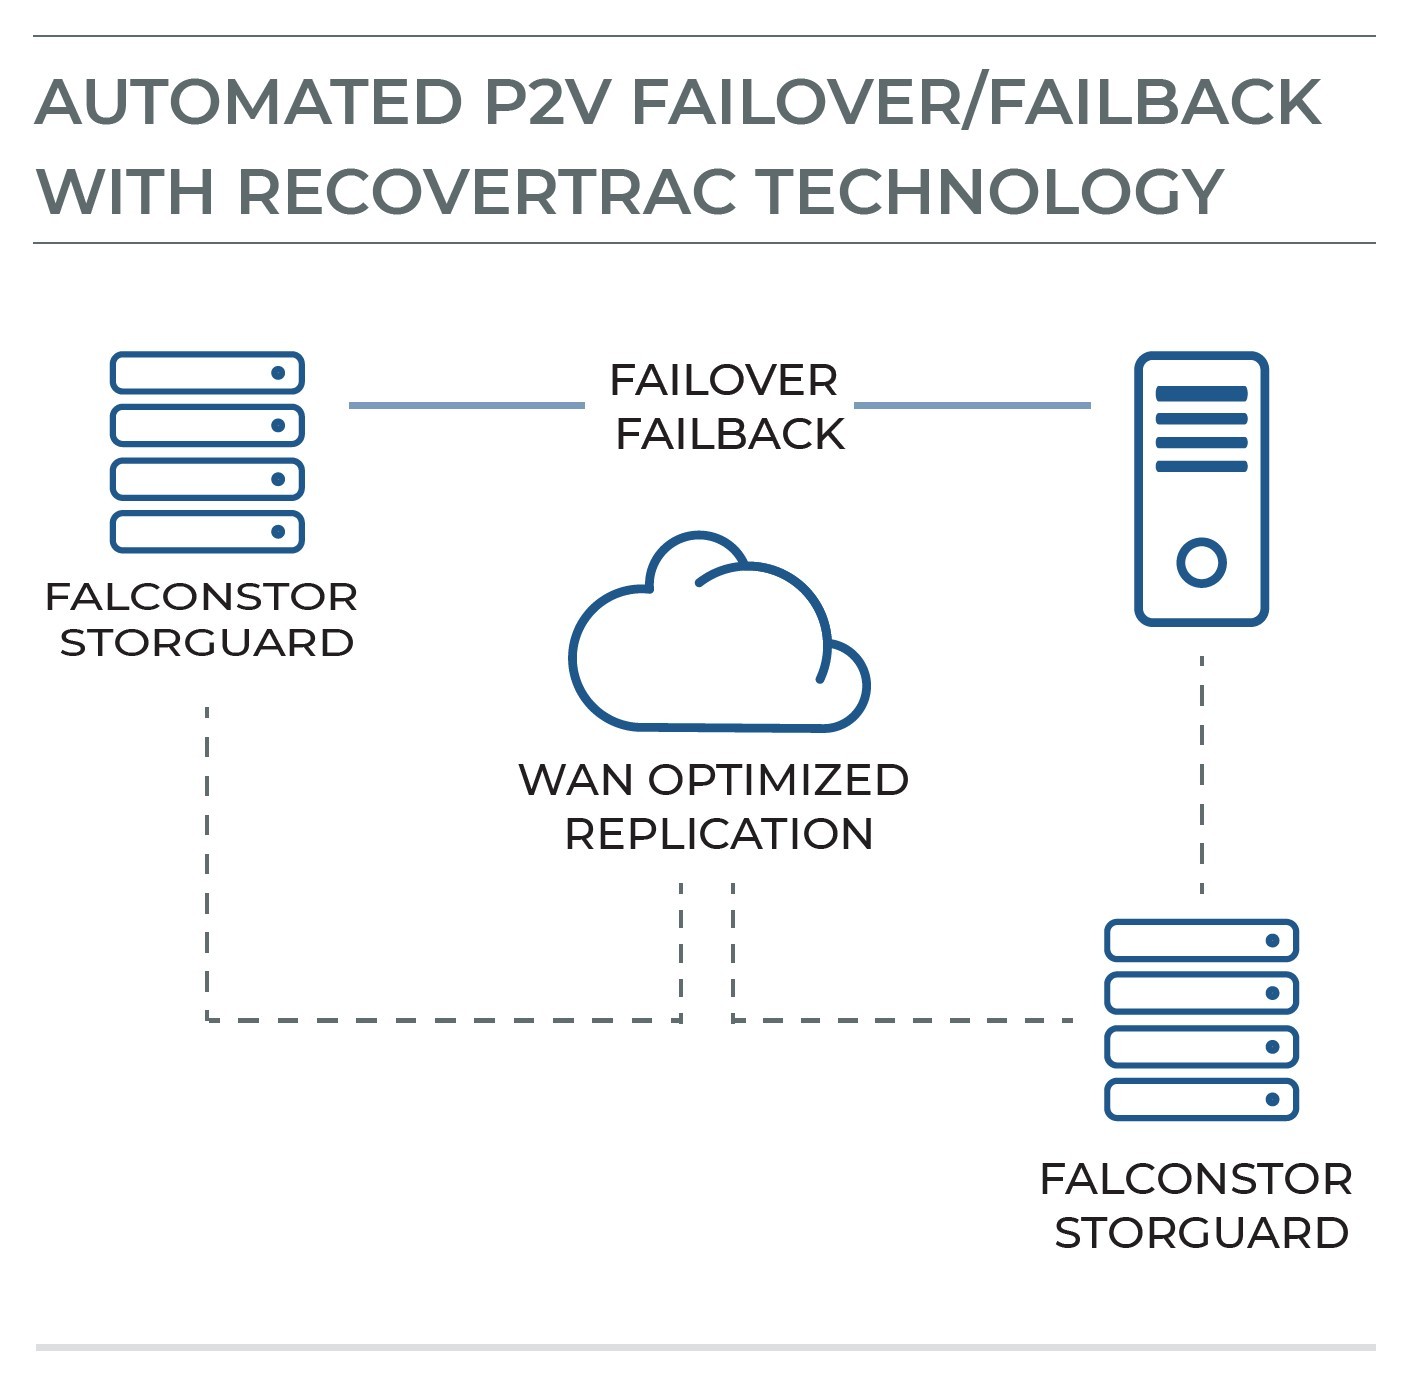 Failover-Failback with RecoverTrac technology